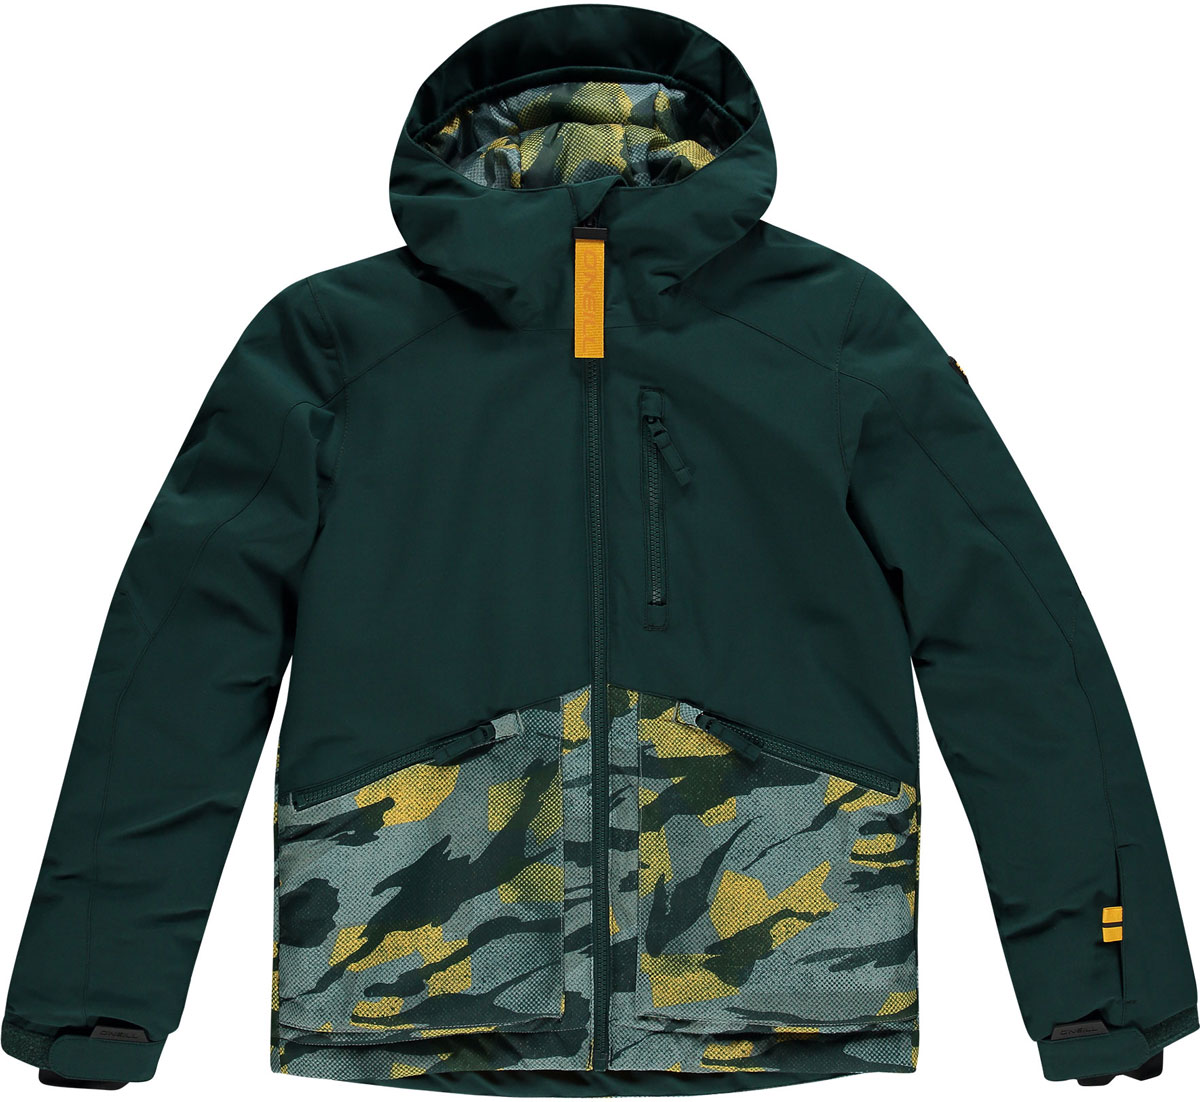 Boys' ski/snowboarding jacket